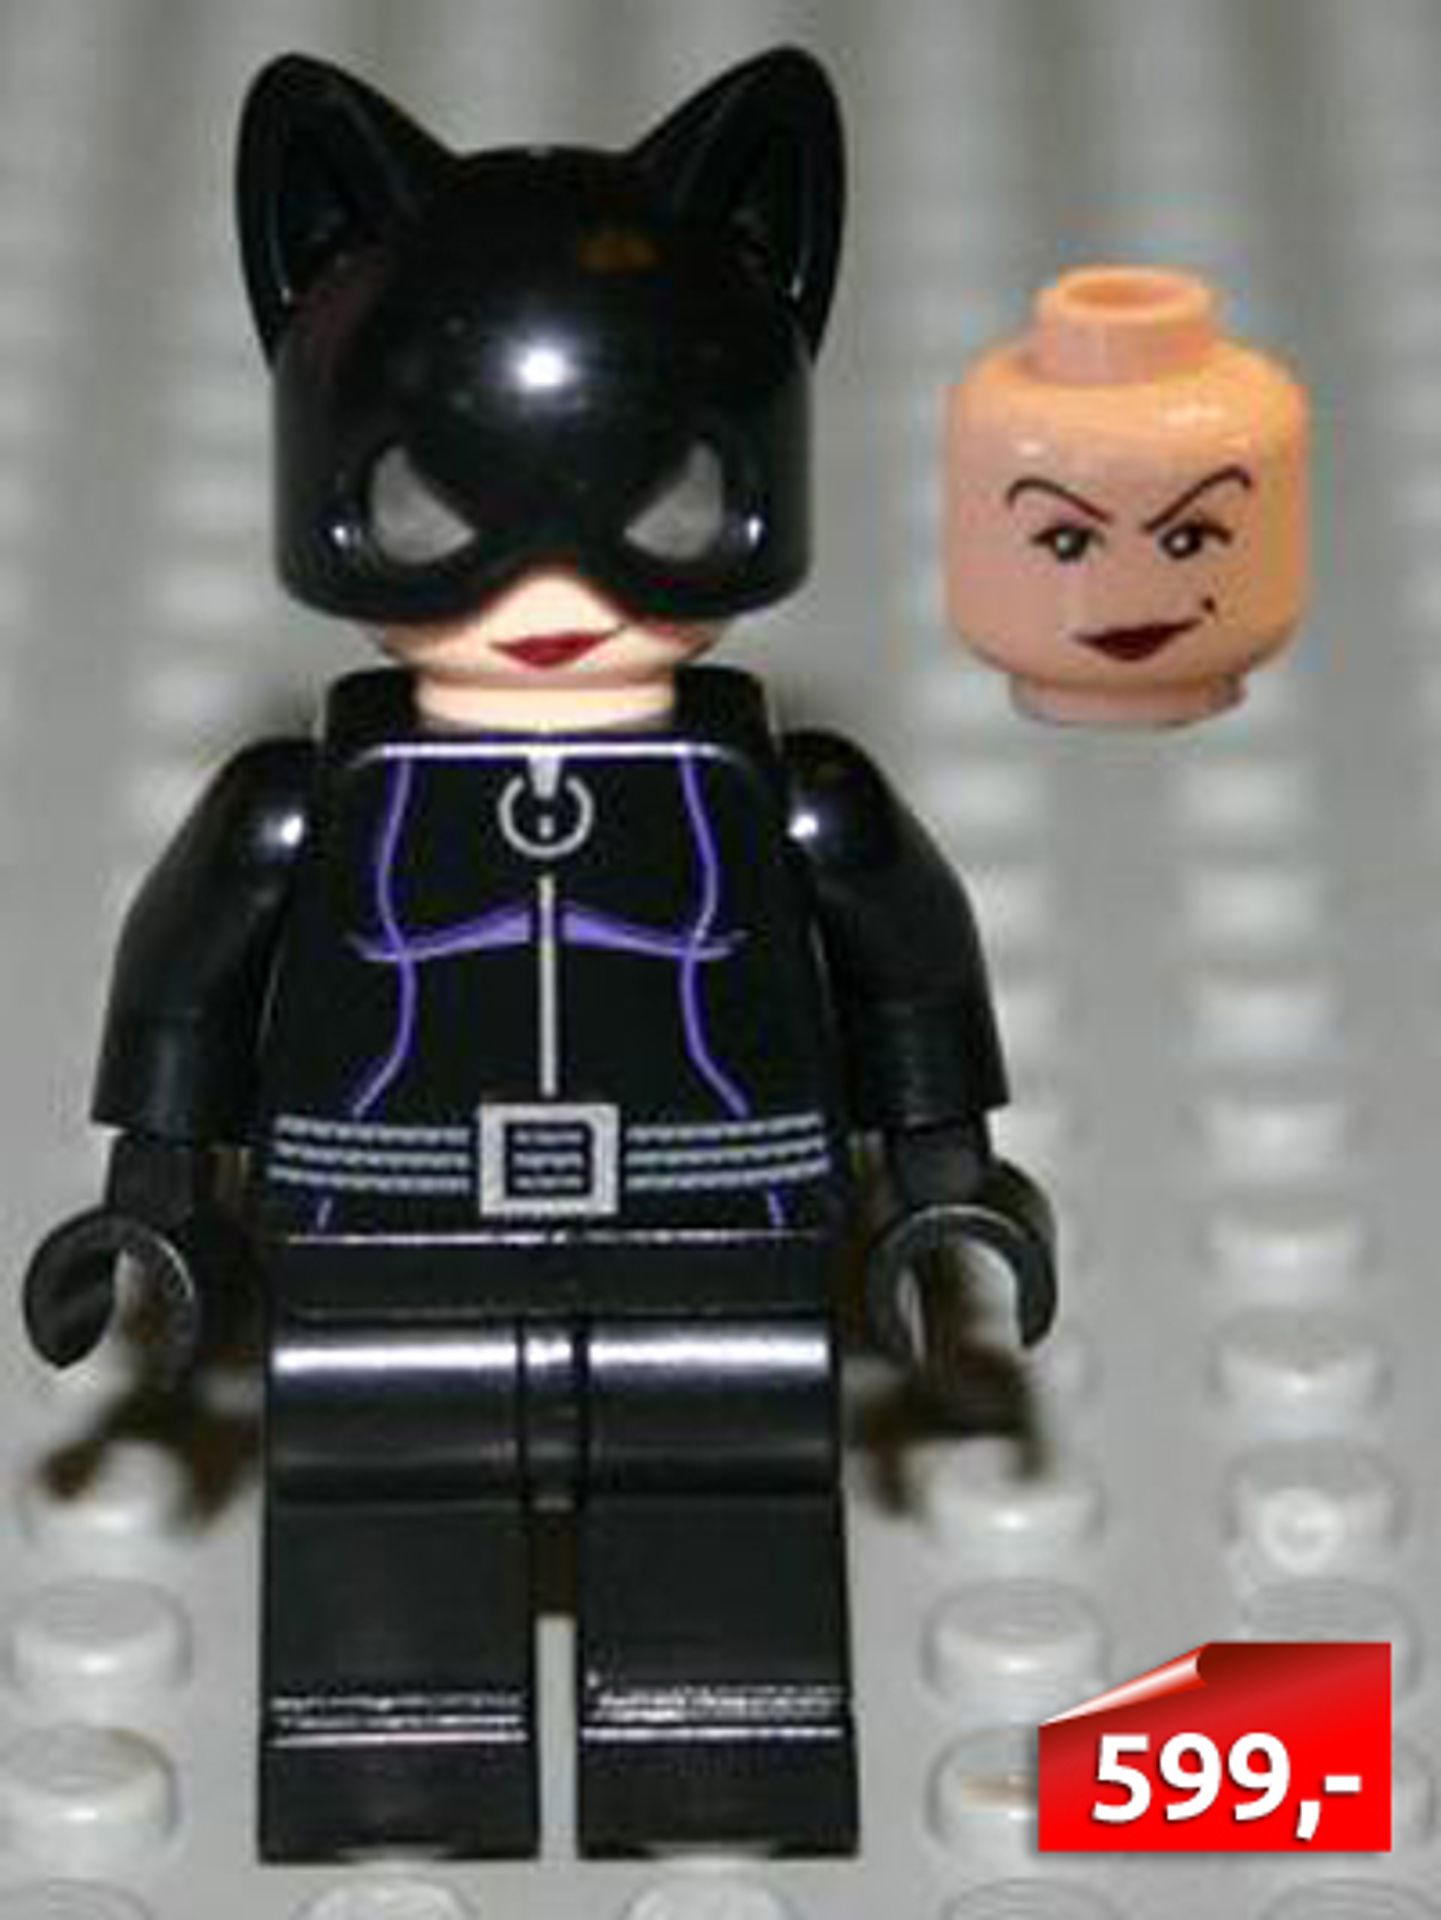 LEGO figurka Batman Catwoman - 599 Kč - GALERIE: Cenné LEGO figurky (3/12)